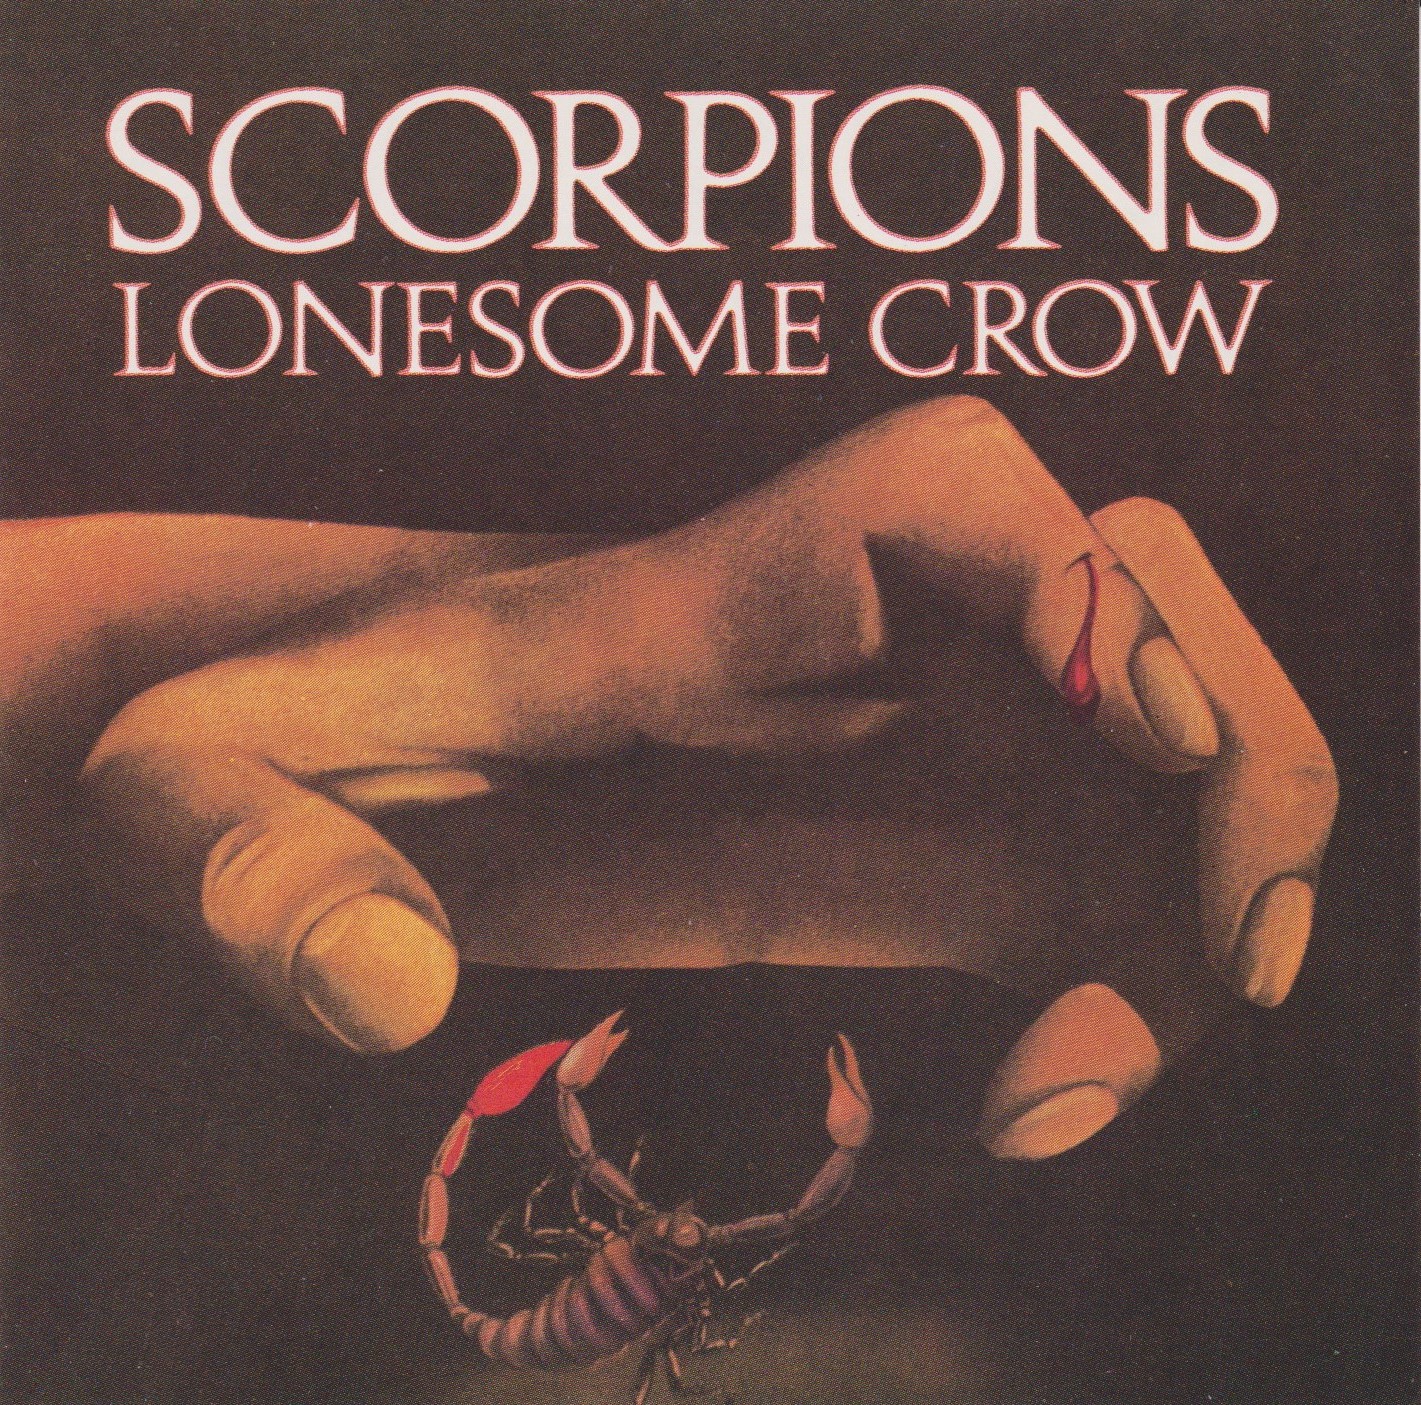 Scorpions Lonesome Crow Rar